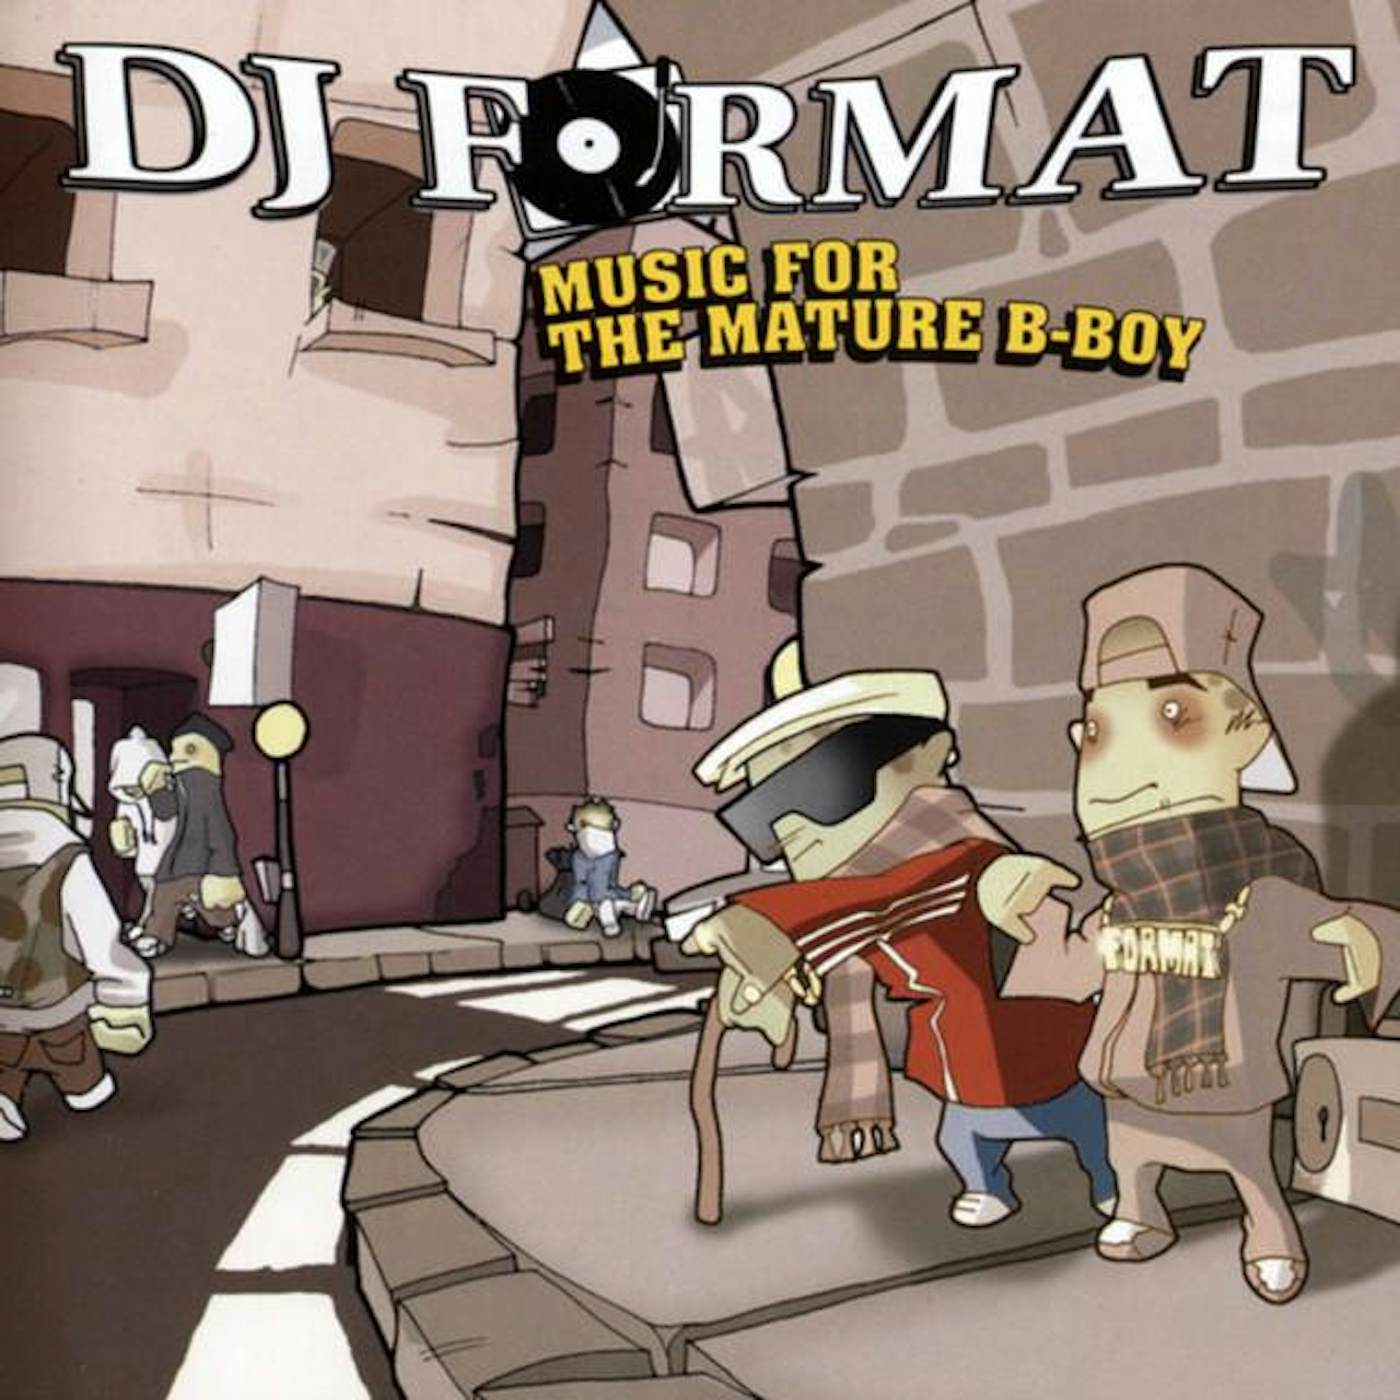 DJ Format